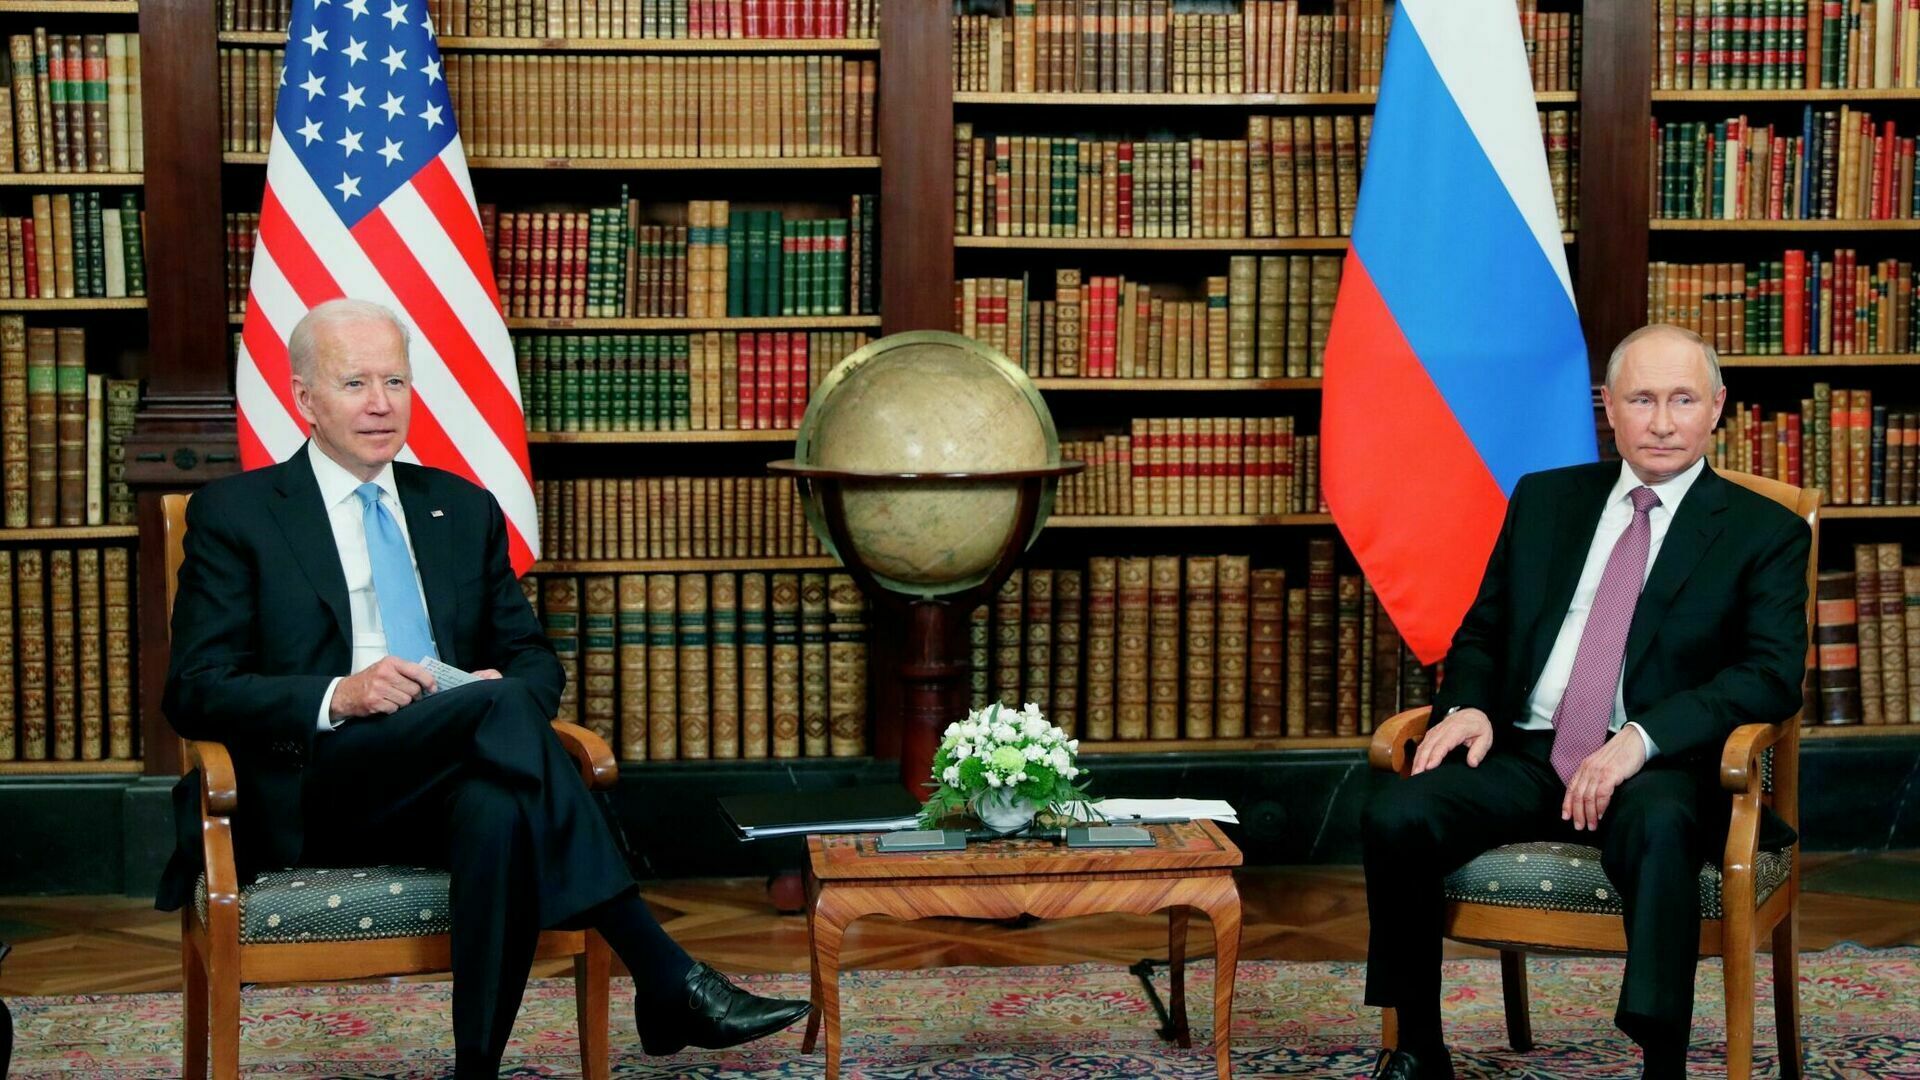 "Not a sprint, but a marathon": experts summed up the results of the Biden-Putin summit